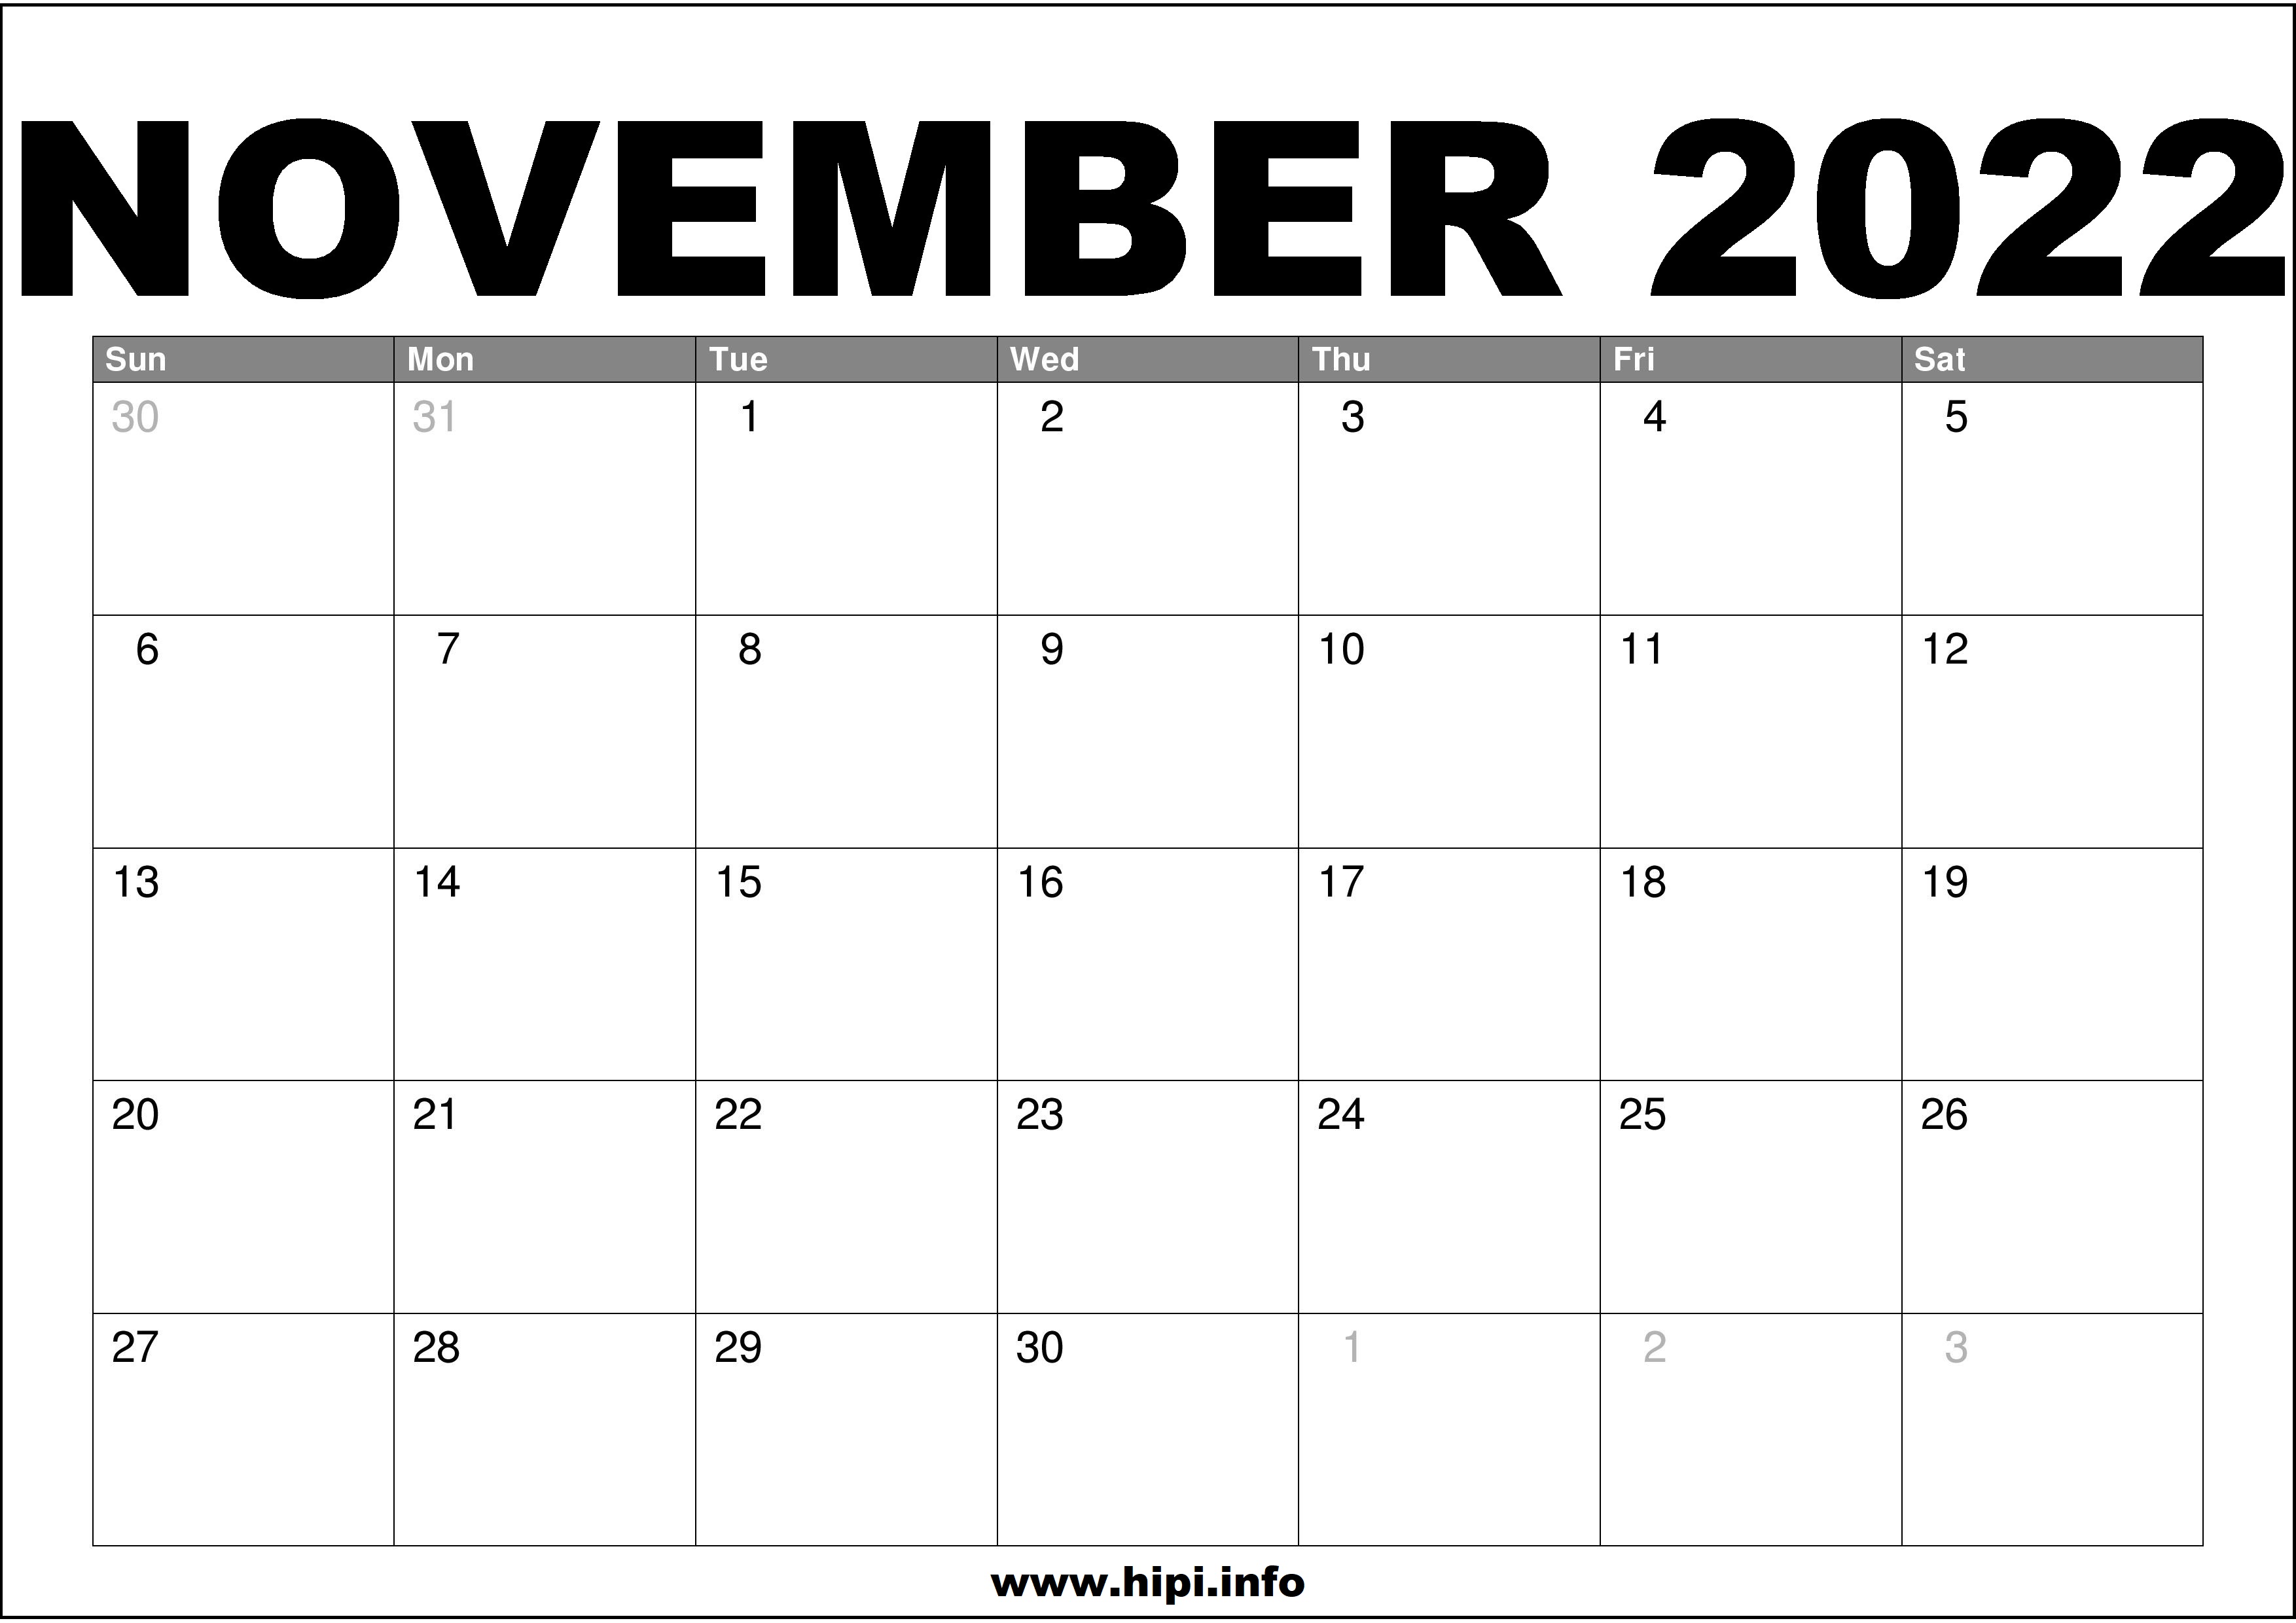 Nov 2022 Calendar Printable November 2022 Calendar Printable Free - Hipi.info | Calendars Printable Free